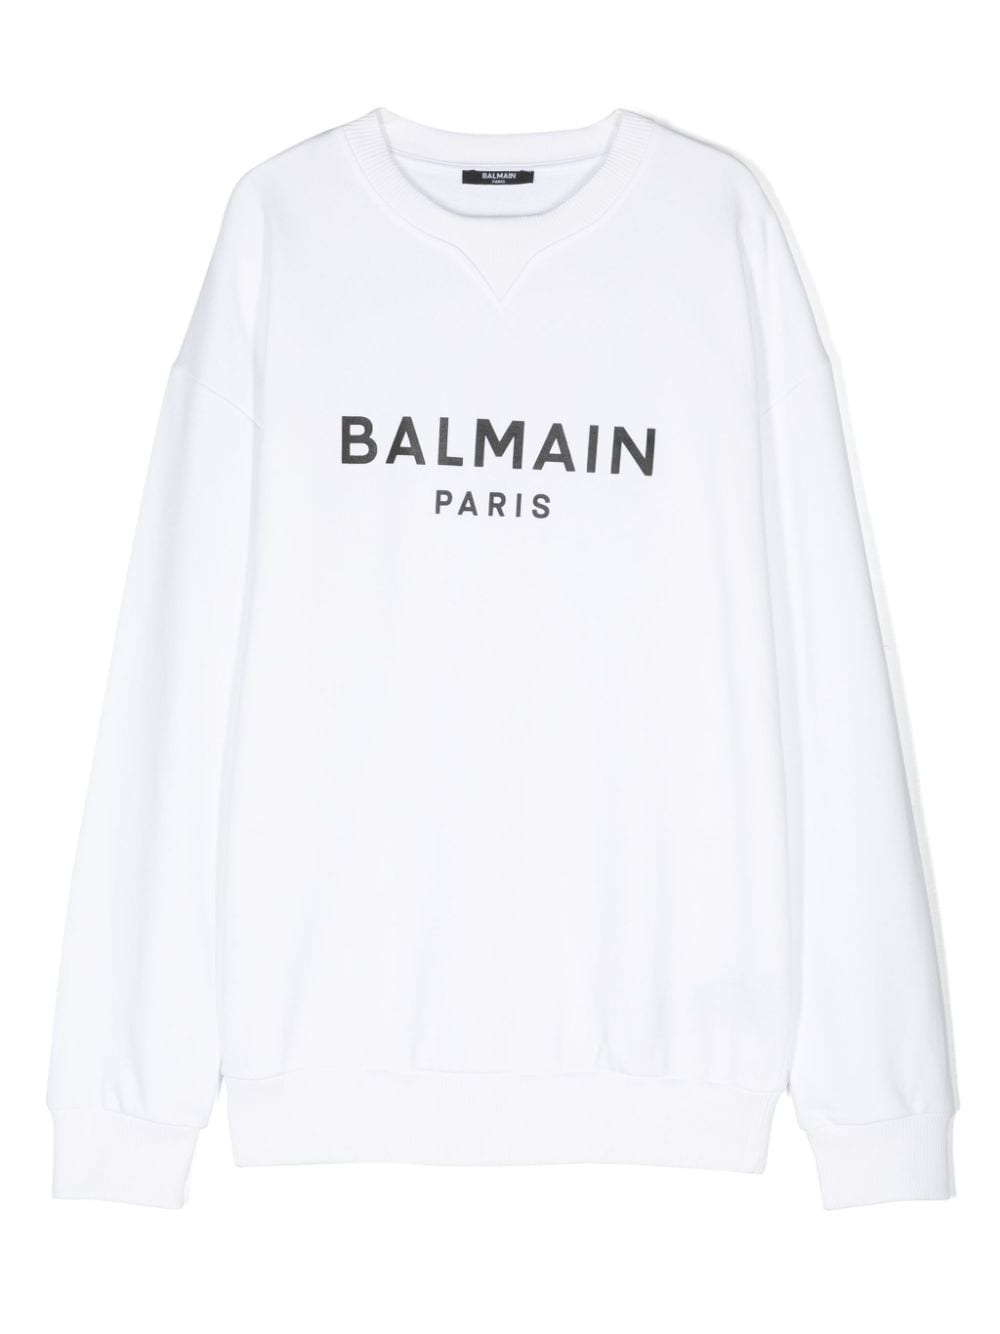 White sweatshirt for boys with black logo